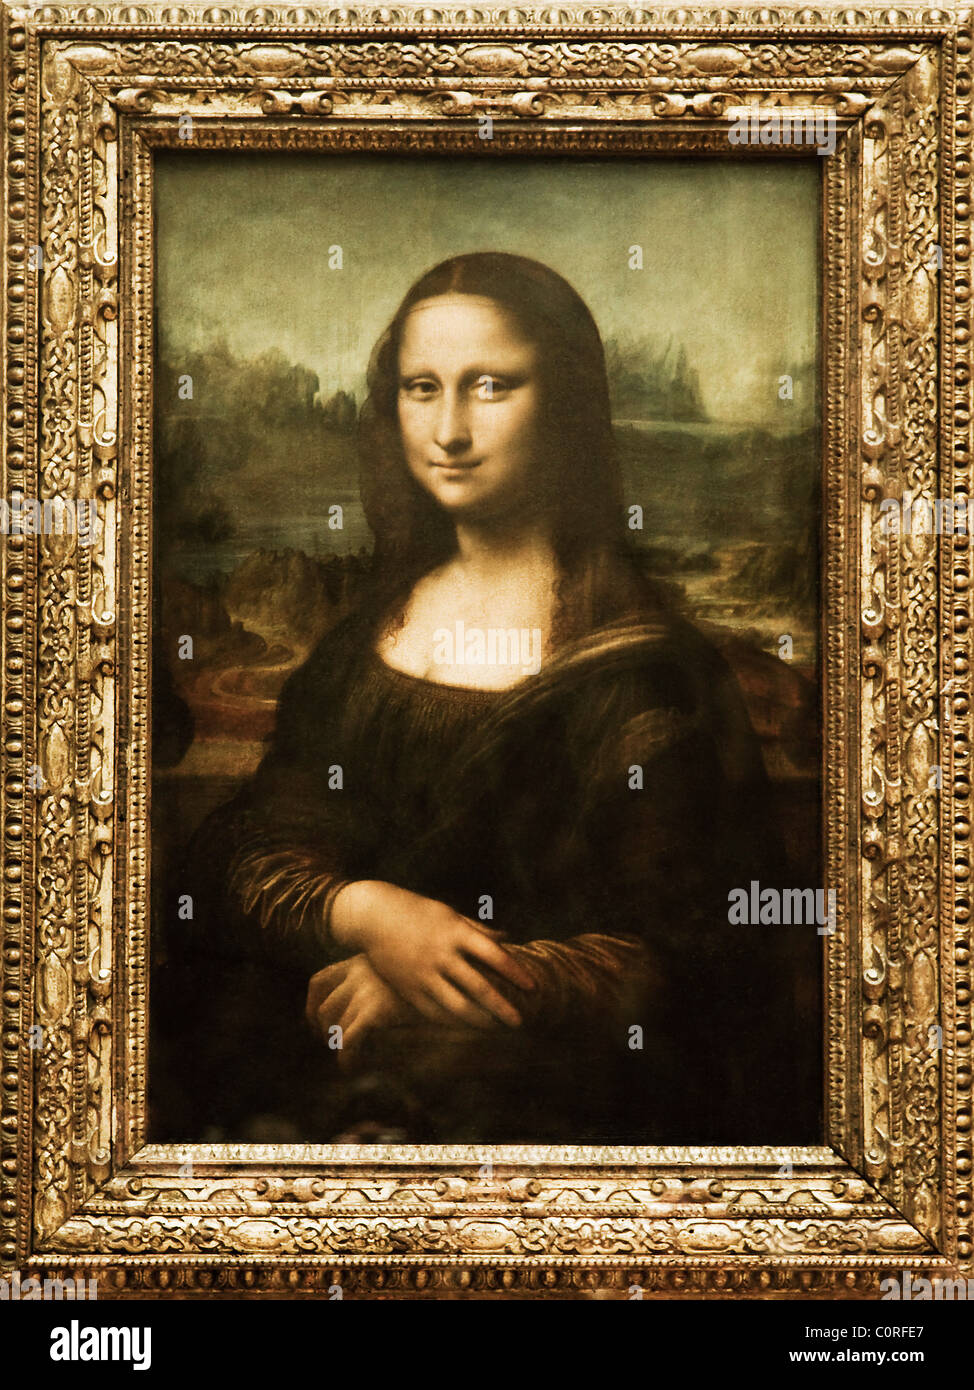 Mona Lisa dipinto in un museo, il Musee du Louvre, Parigi, Francia Foto Stock